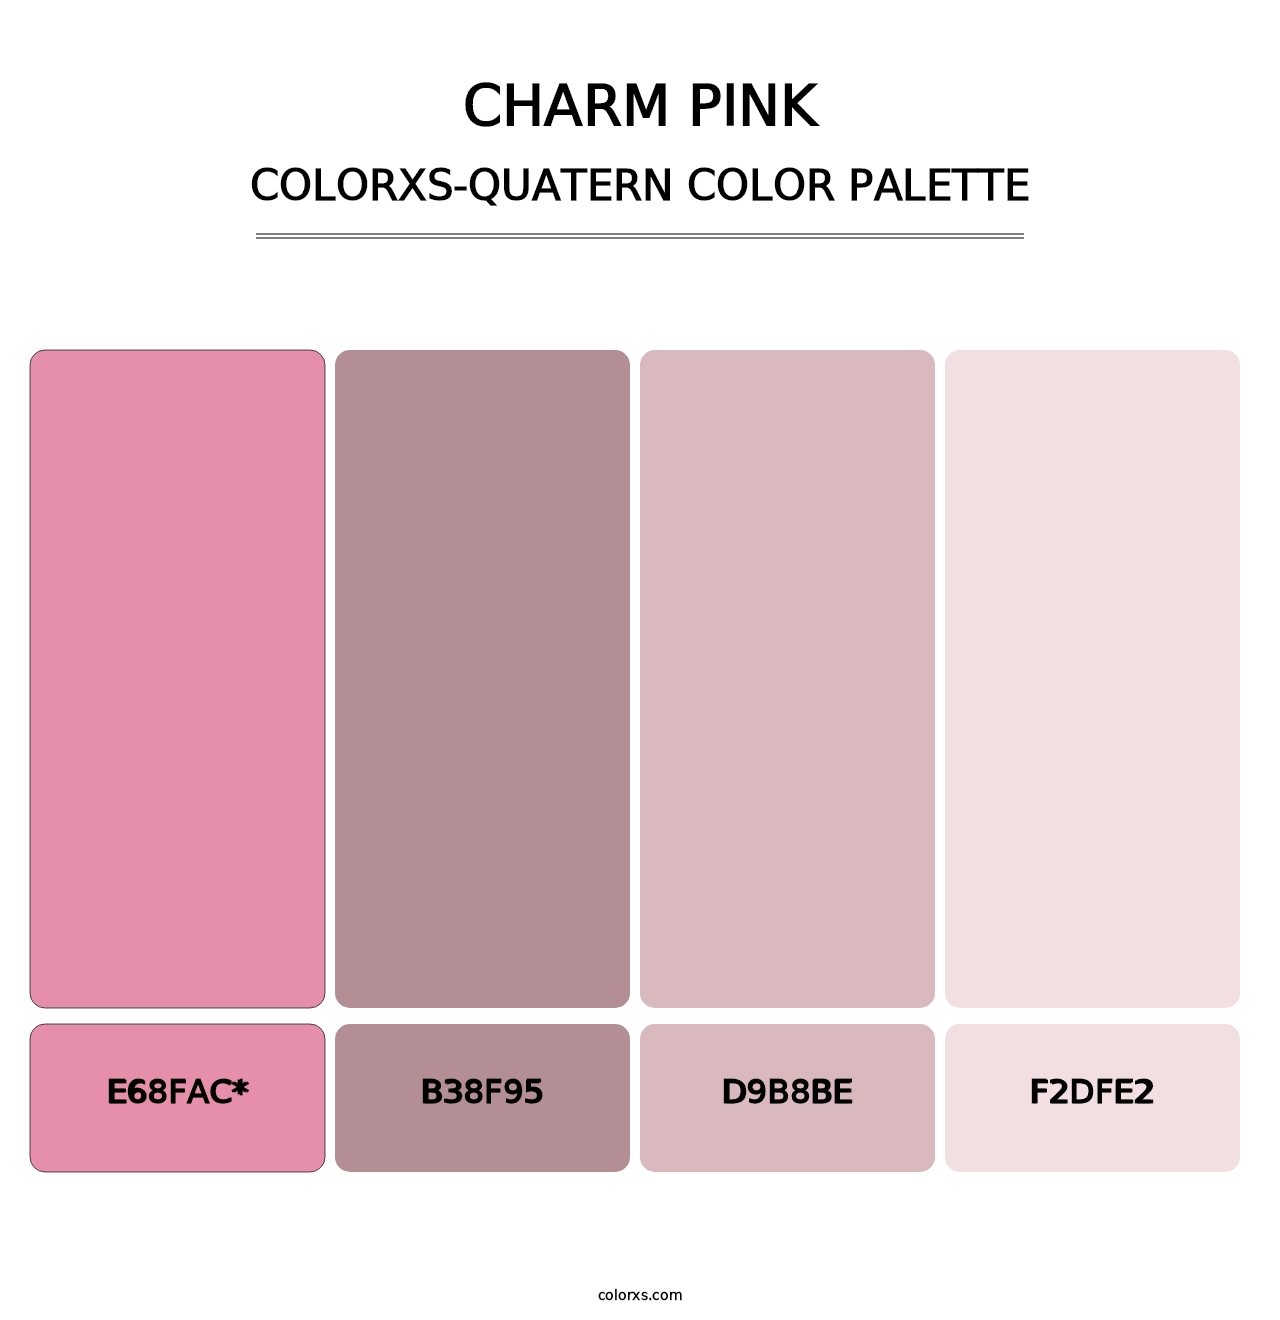 Charm Pink - Colorxs Quatern Palette